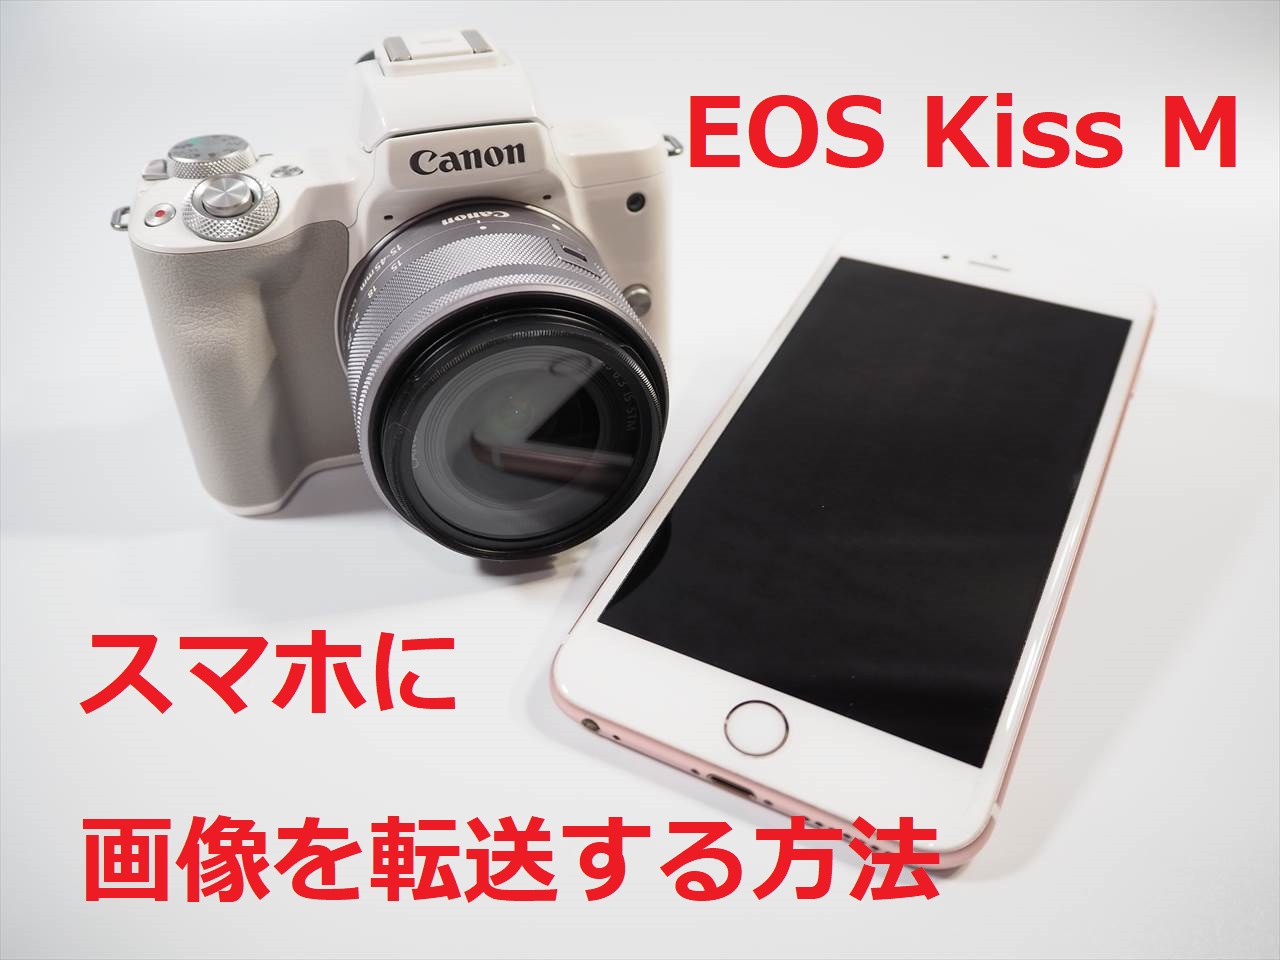 CANON EOS Kiss M で写真をスマホに転送する方法 | digi-cam.net